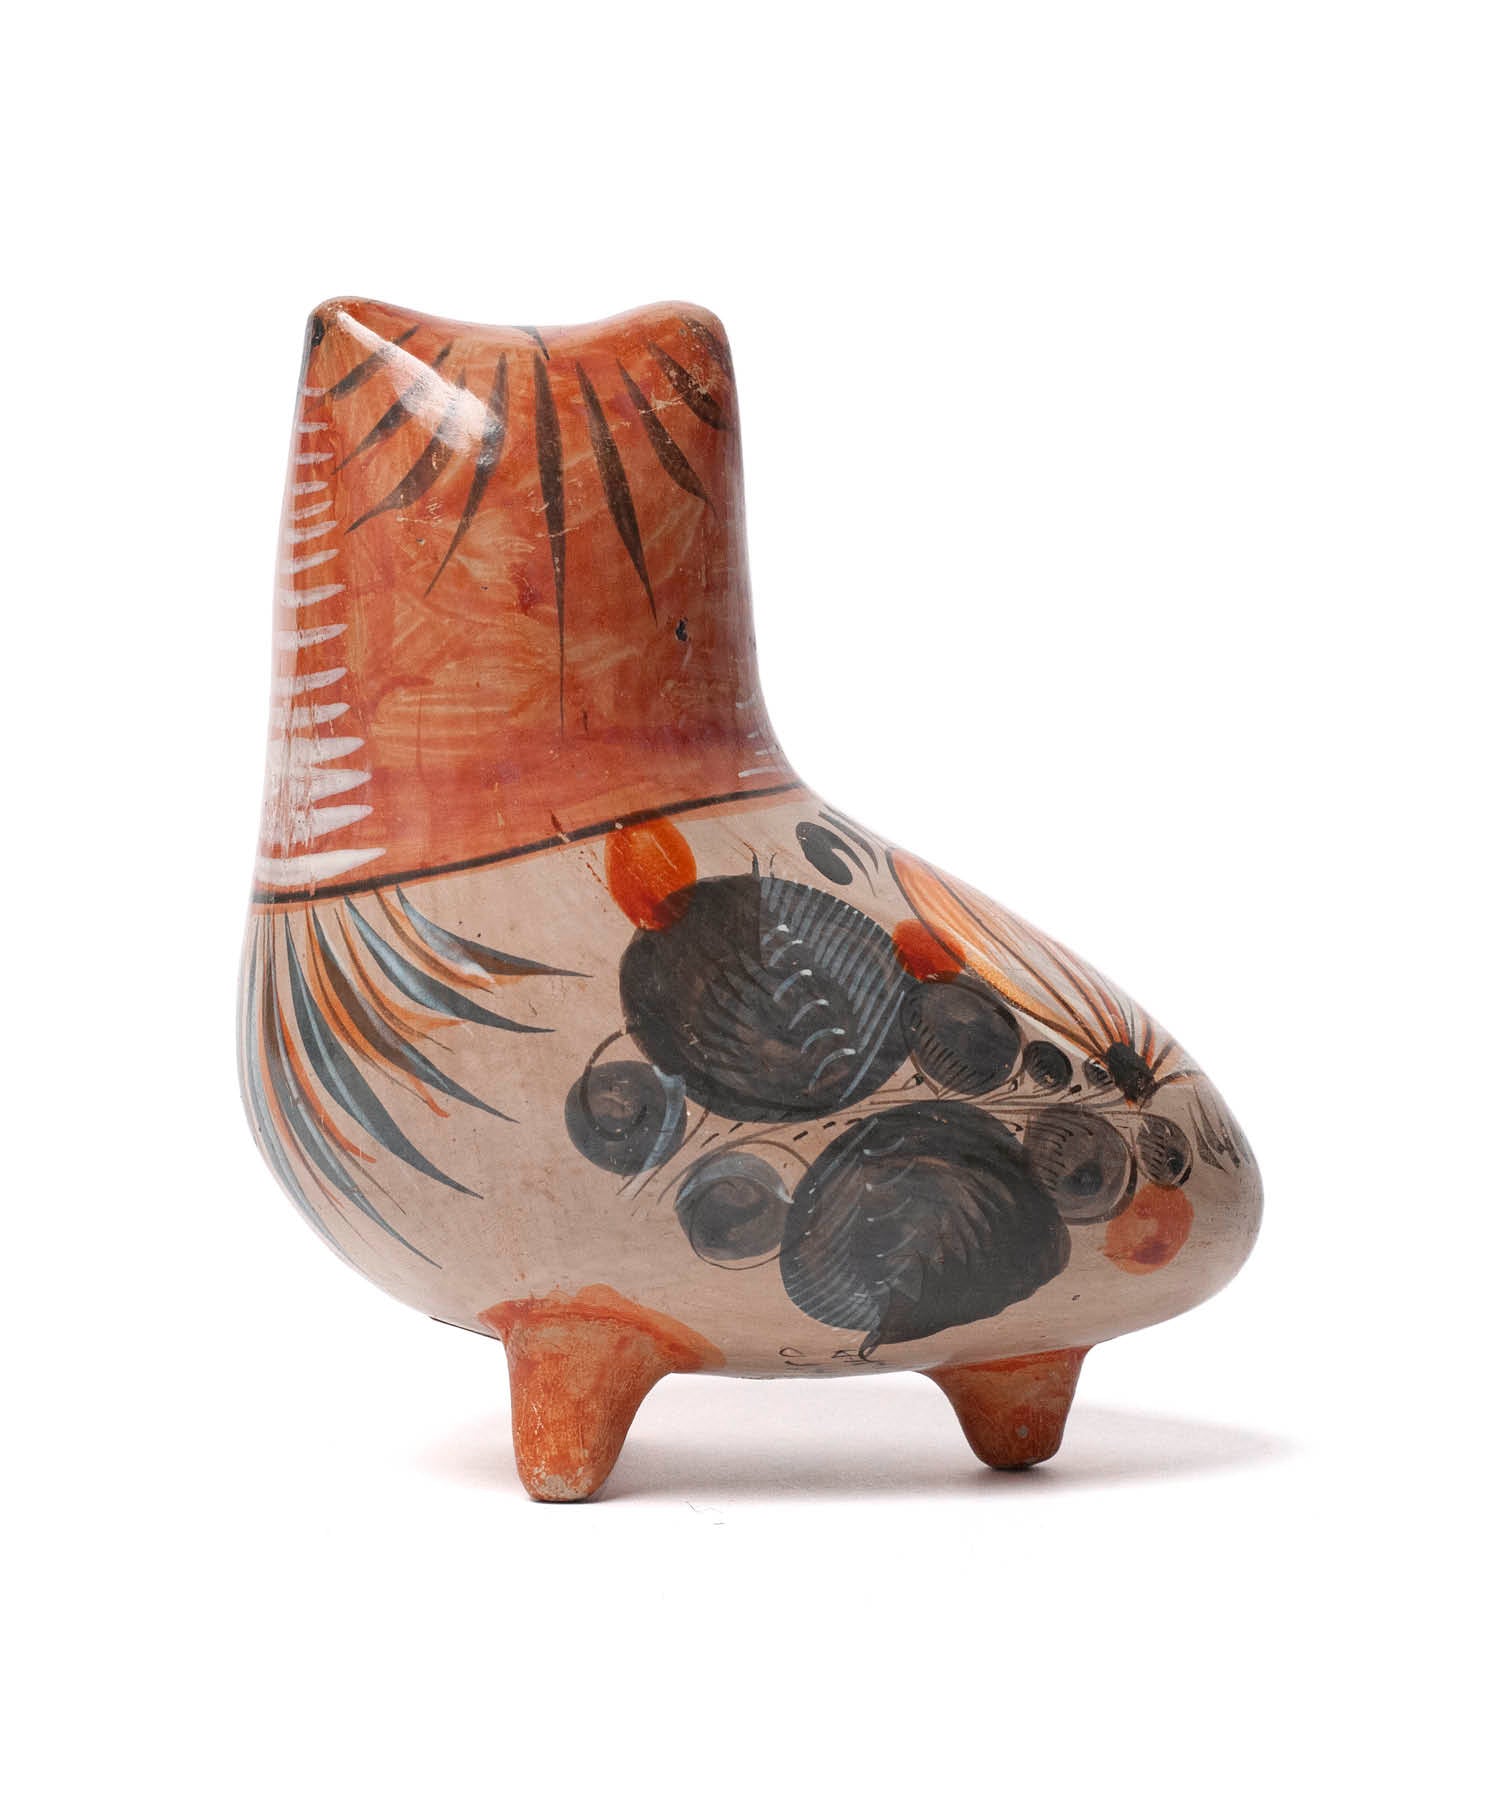 Vintage Object : Tonala Owl | LIKE THIS SHOP